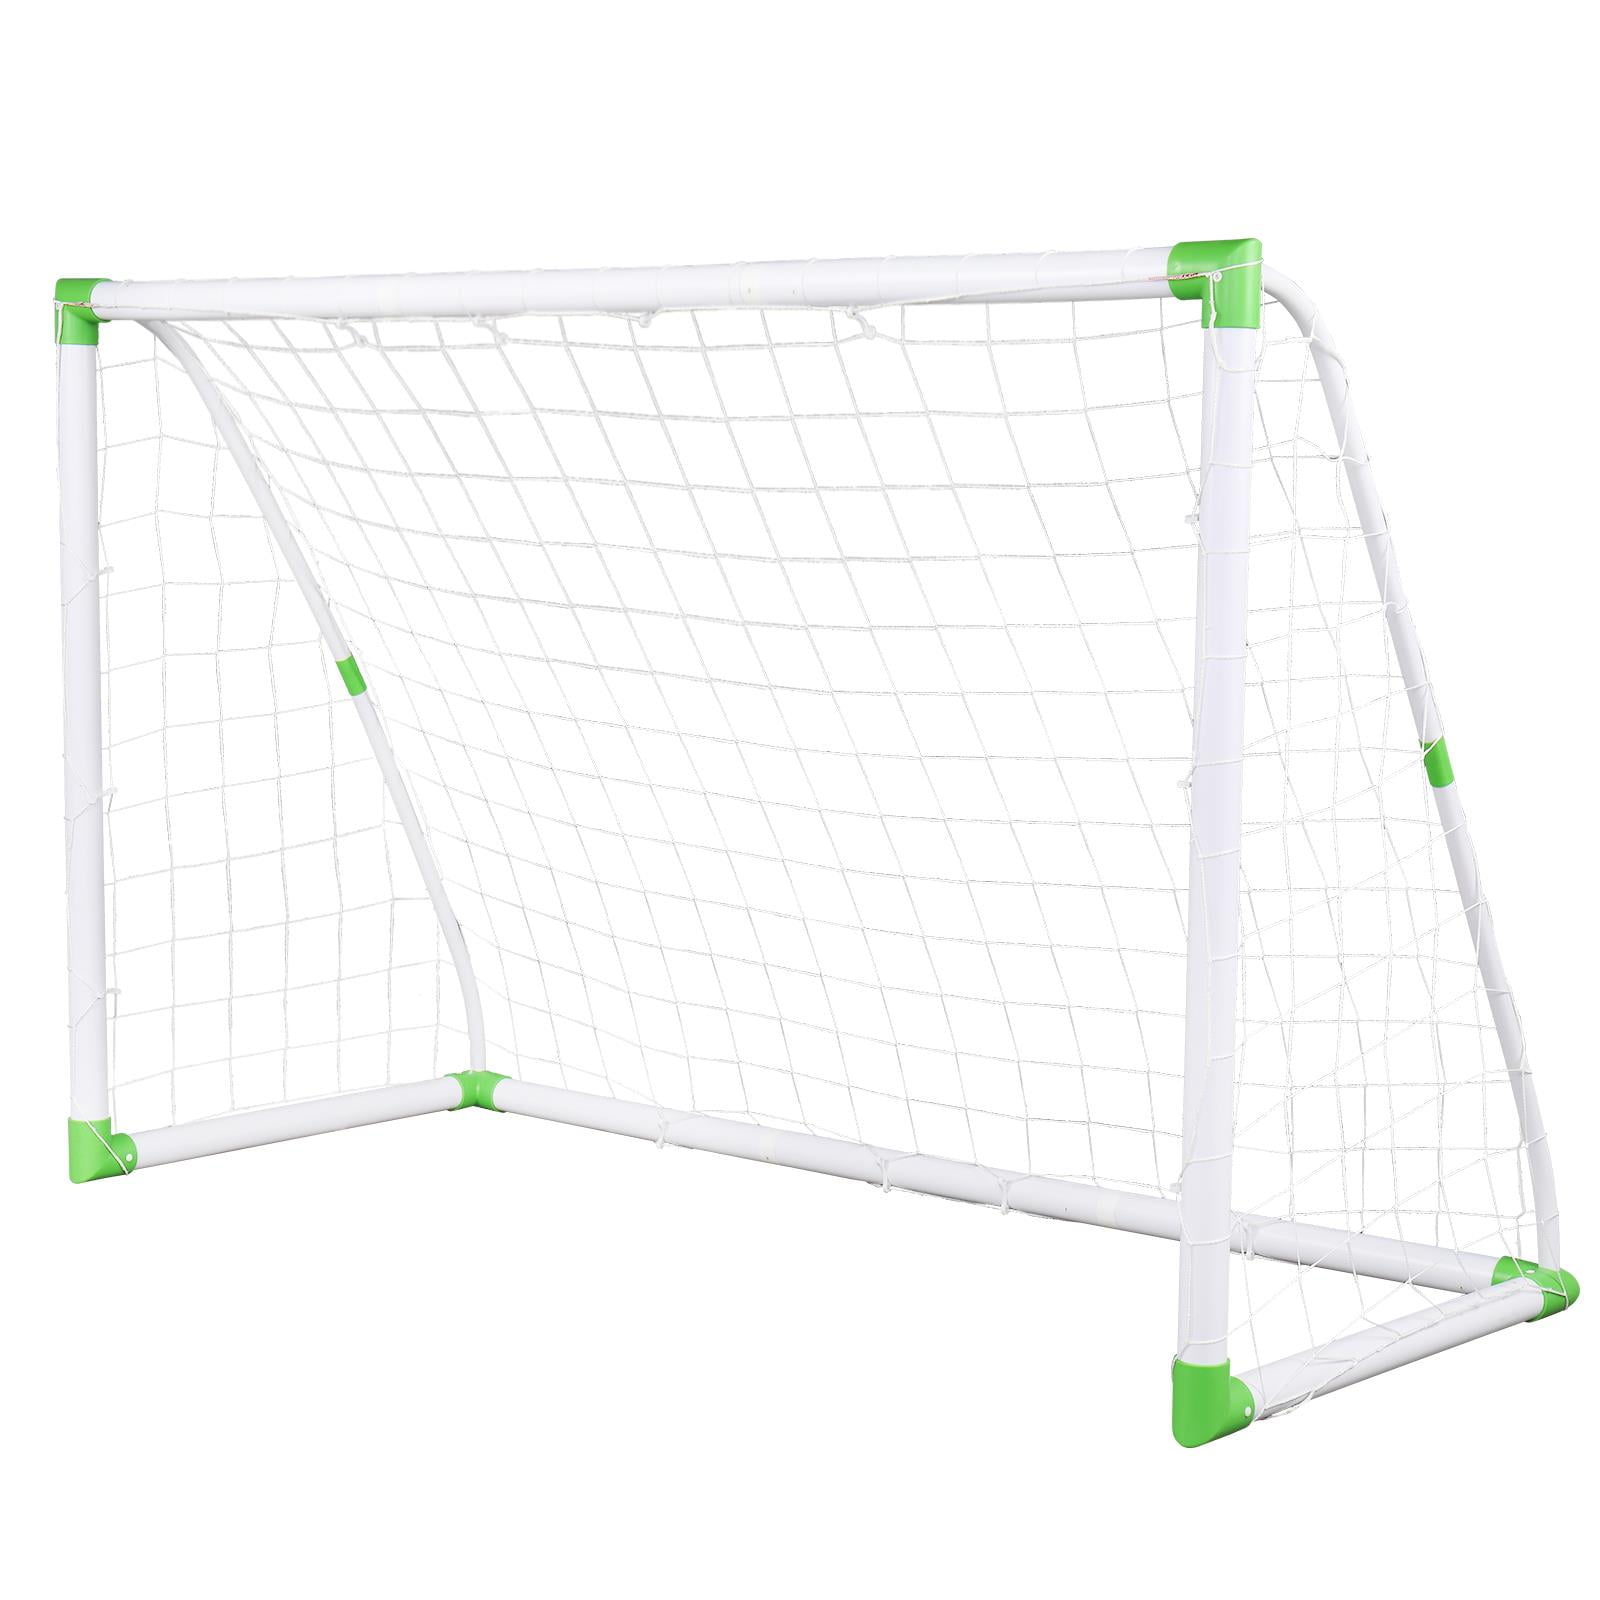 Details about   28"x19.7"Football Soccer Goal Post Net For Kids Outdoor Football Match Training 